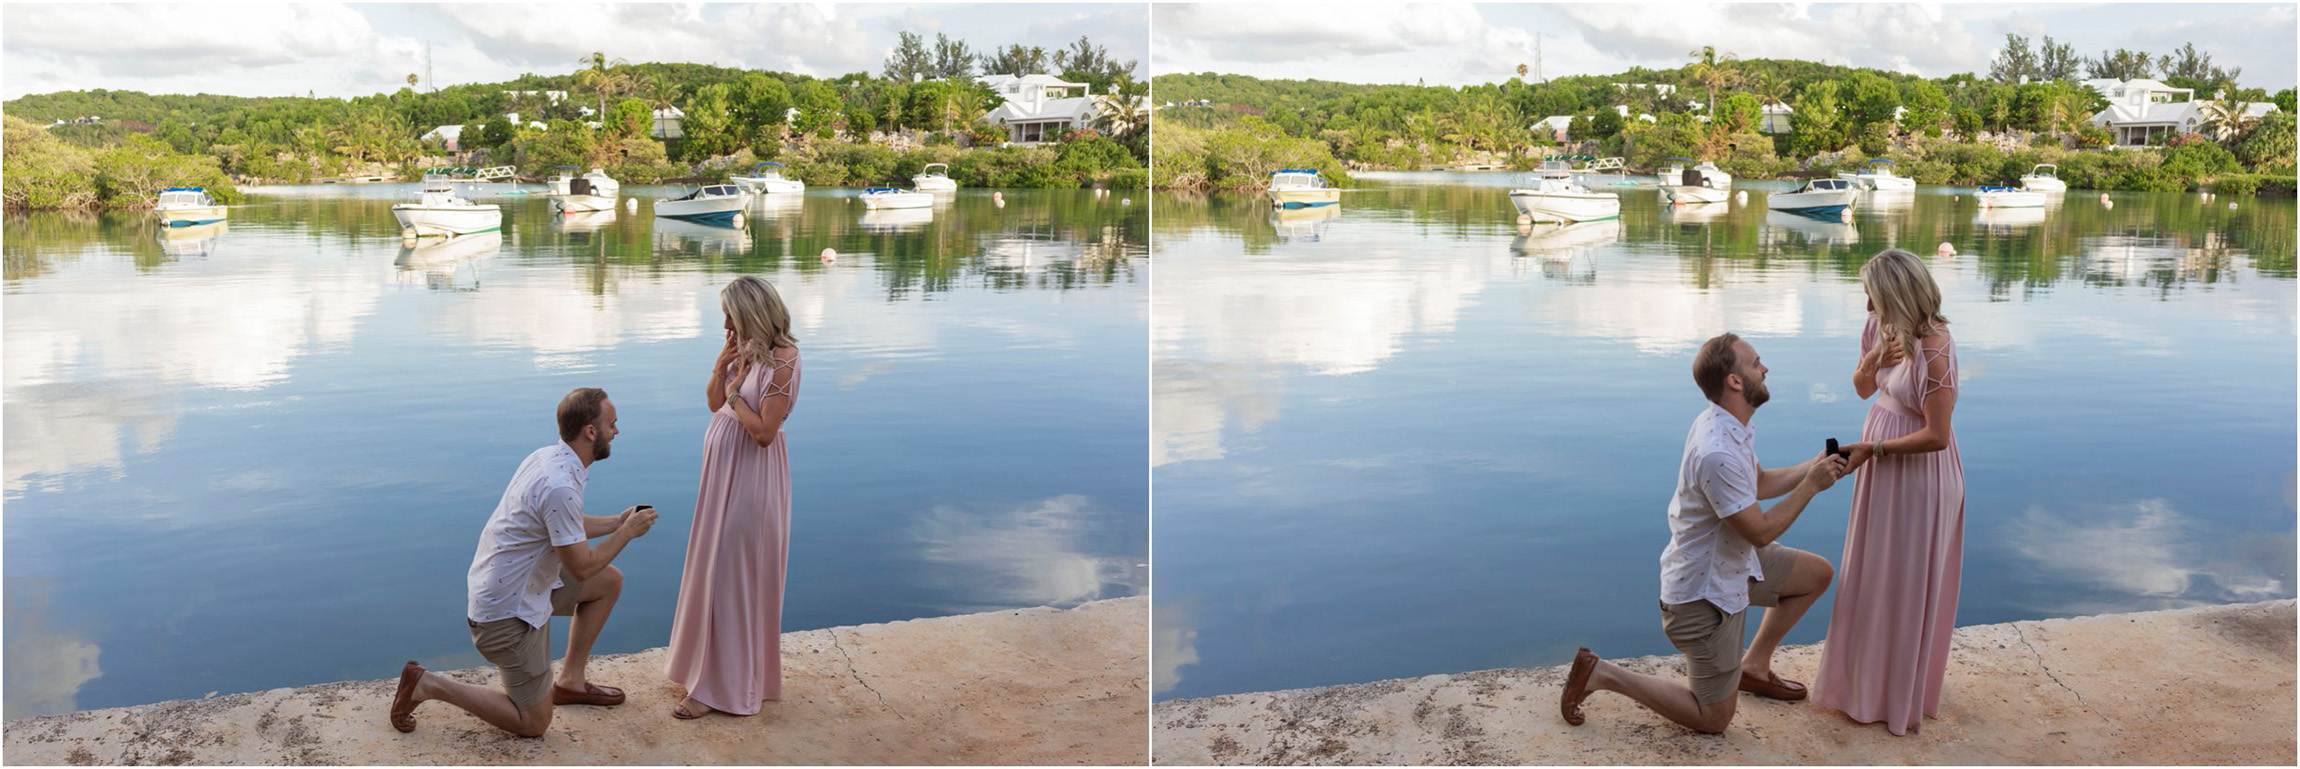 ©FianderFoto_Bermuda_Tom Moore's Jungle_Proposal Maternity Photographer_Erika_Andy_003.jpg